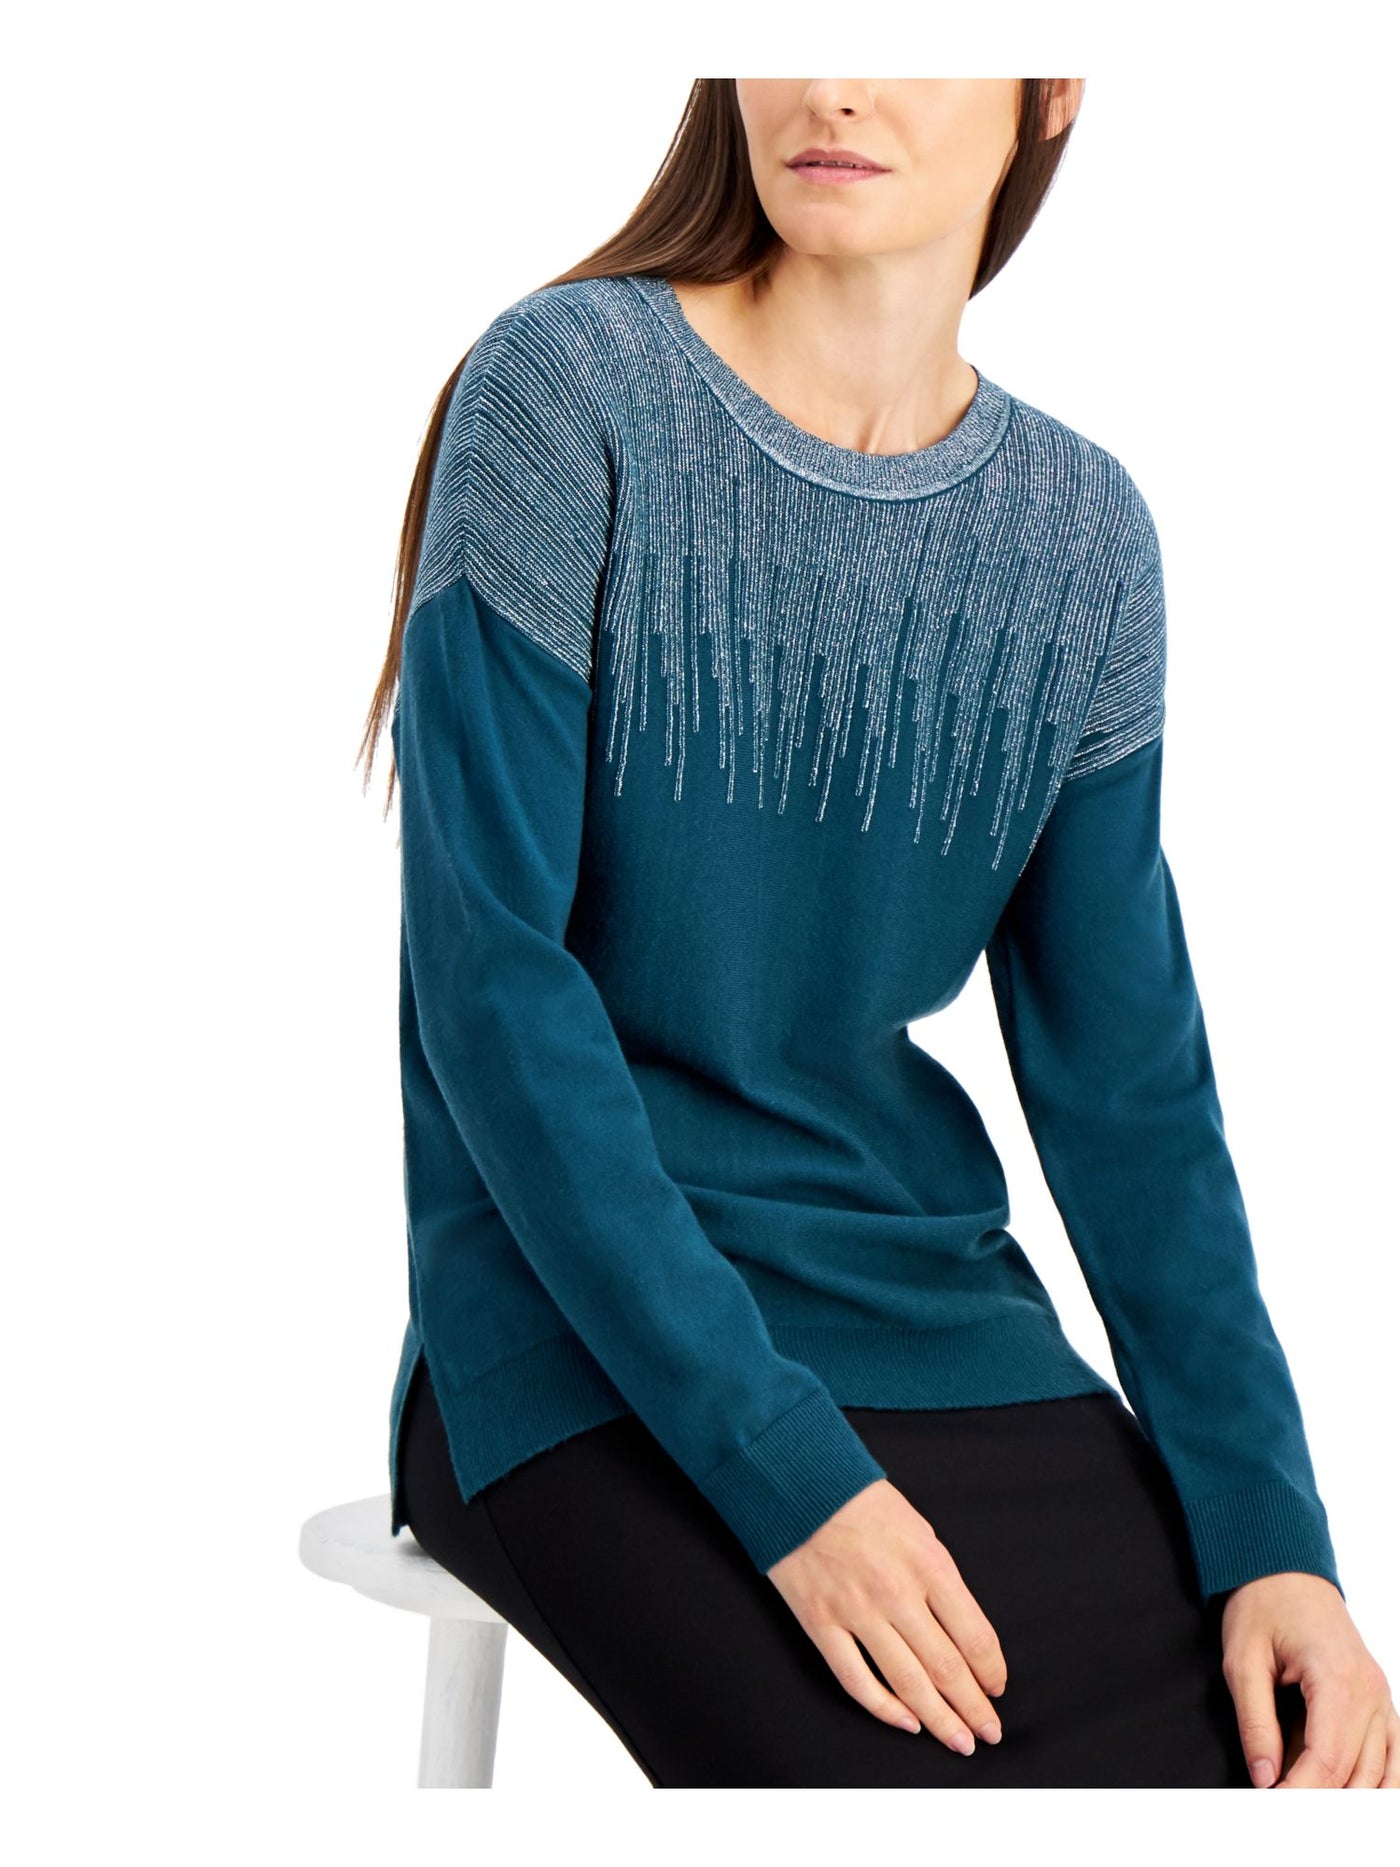 ALFANI Womens Teal Glitter Metallic Printed Long Sleeve Crew Neck Sweater S